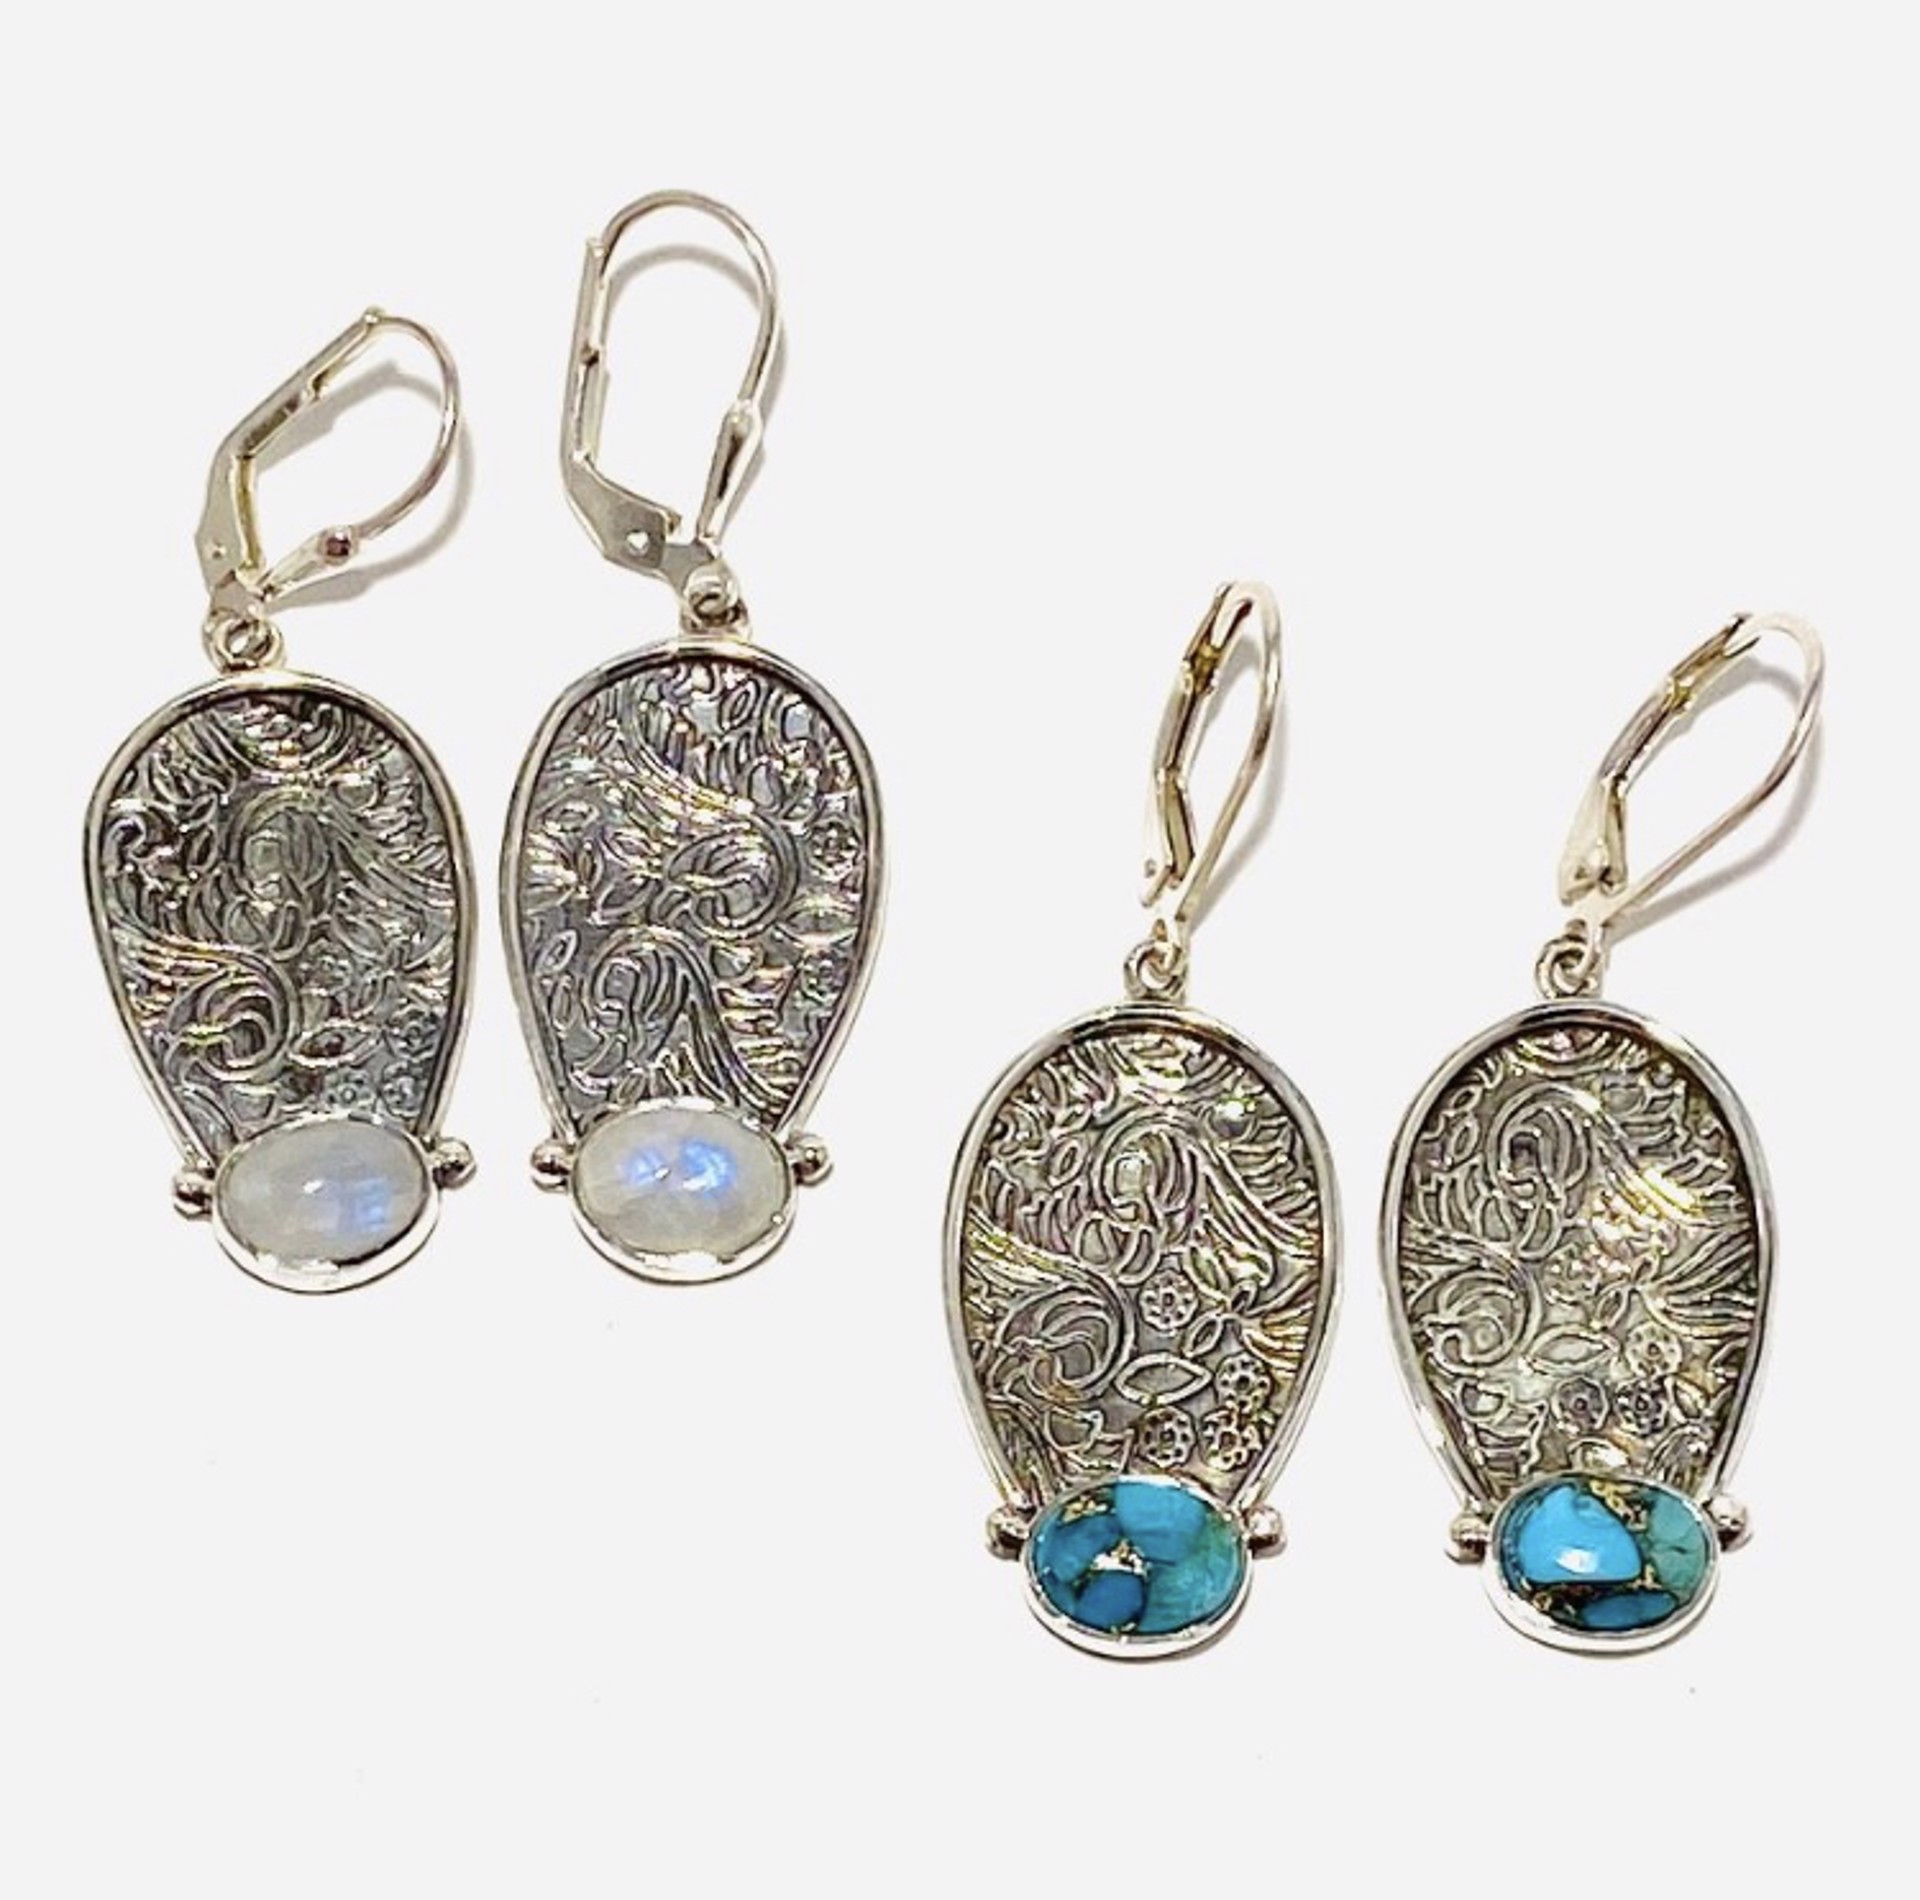 Moonstone, Turquoise Earrings MONSE-3153 by Monica Mehta